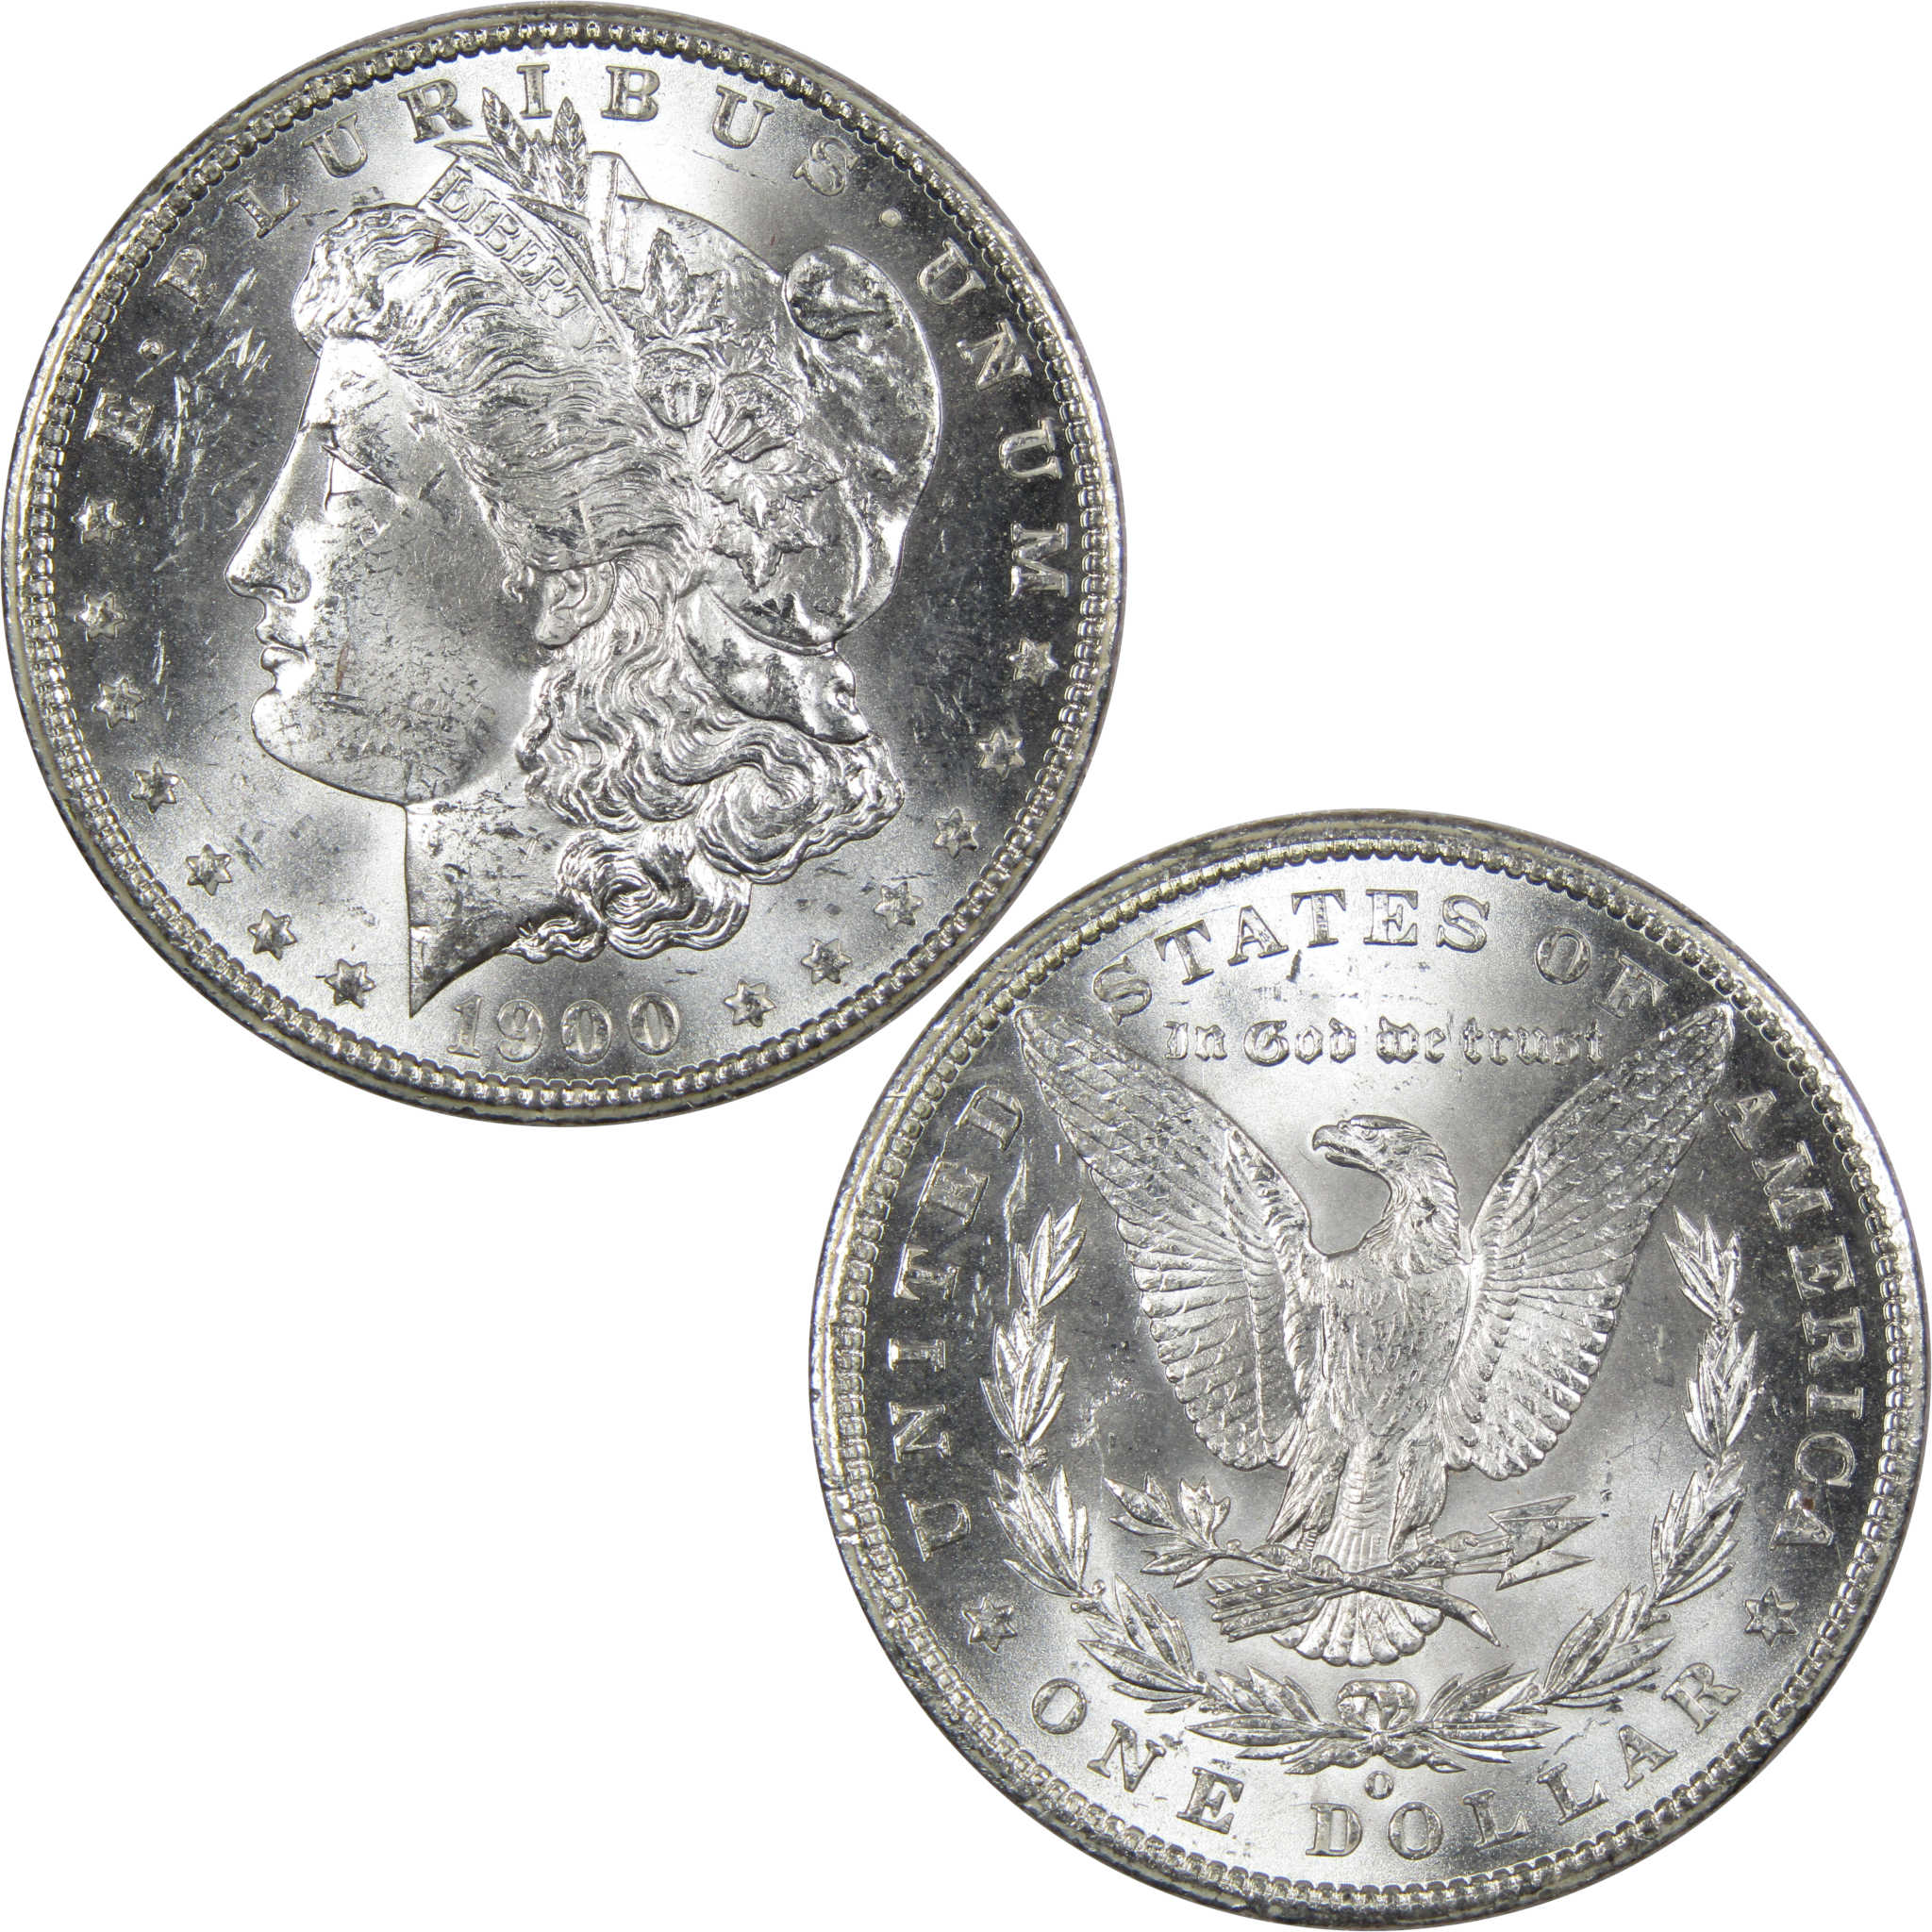 1900 O Morgan Dollar BU Uncirculated Mint State 90% Silver SKU:IPC9780 - Morgan coin - Morgan silver dollar - Morgan silver dollar for sale - Profile Coins &amp; Collectibles